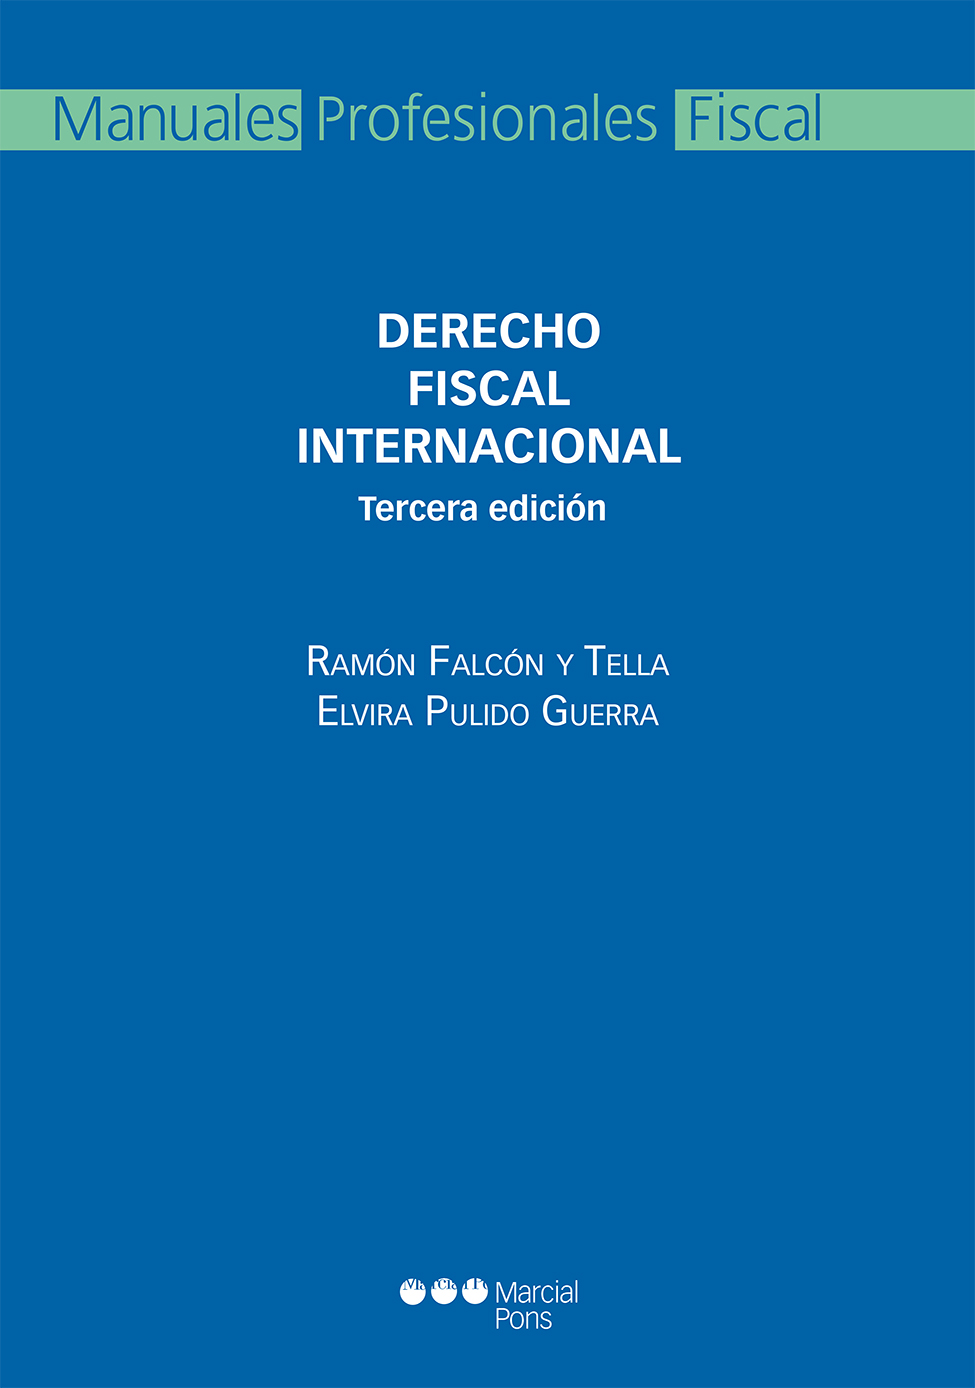 DERECHO FISCAL INTERNACIONAL 2018